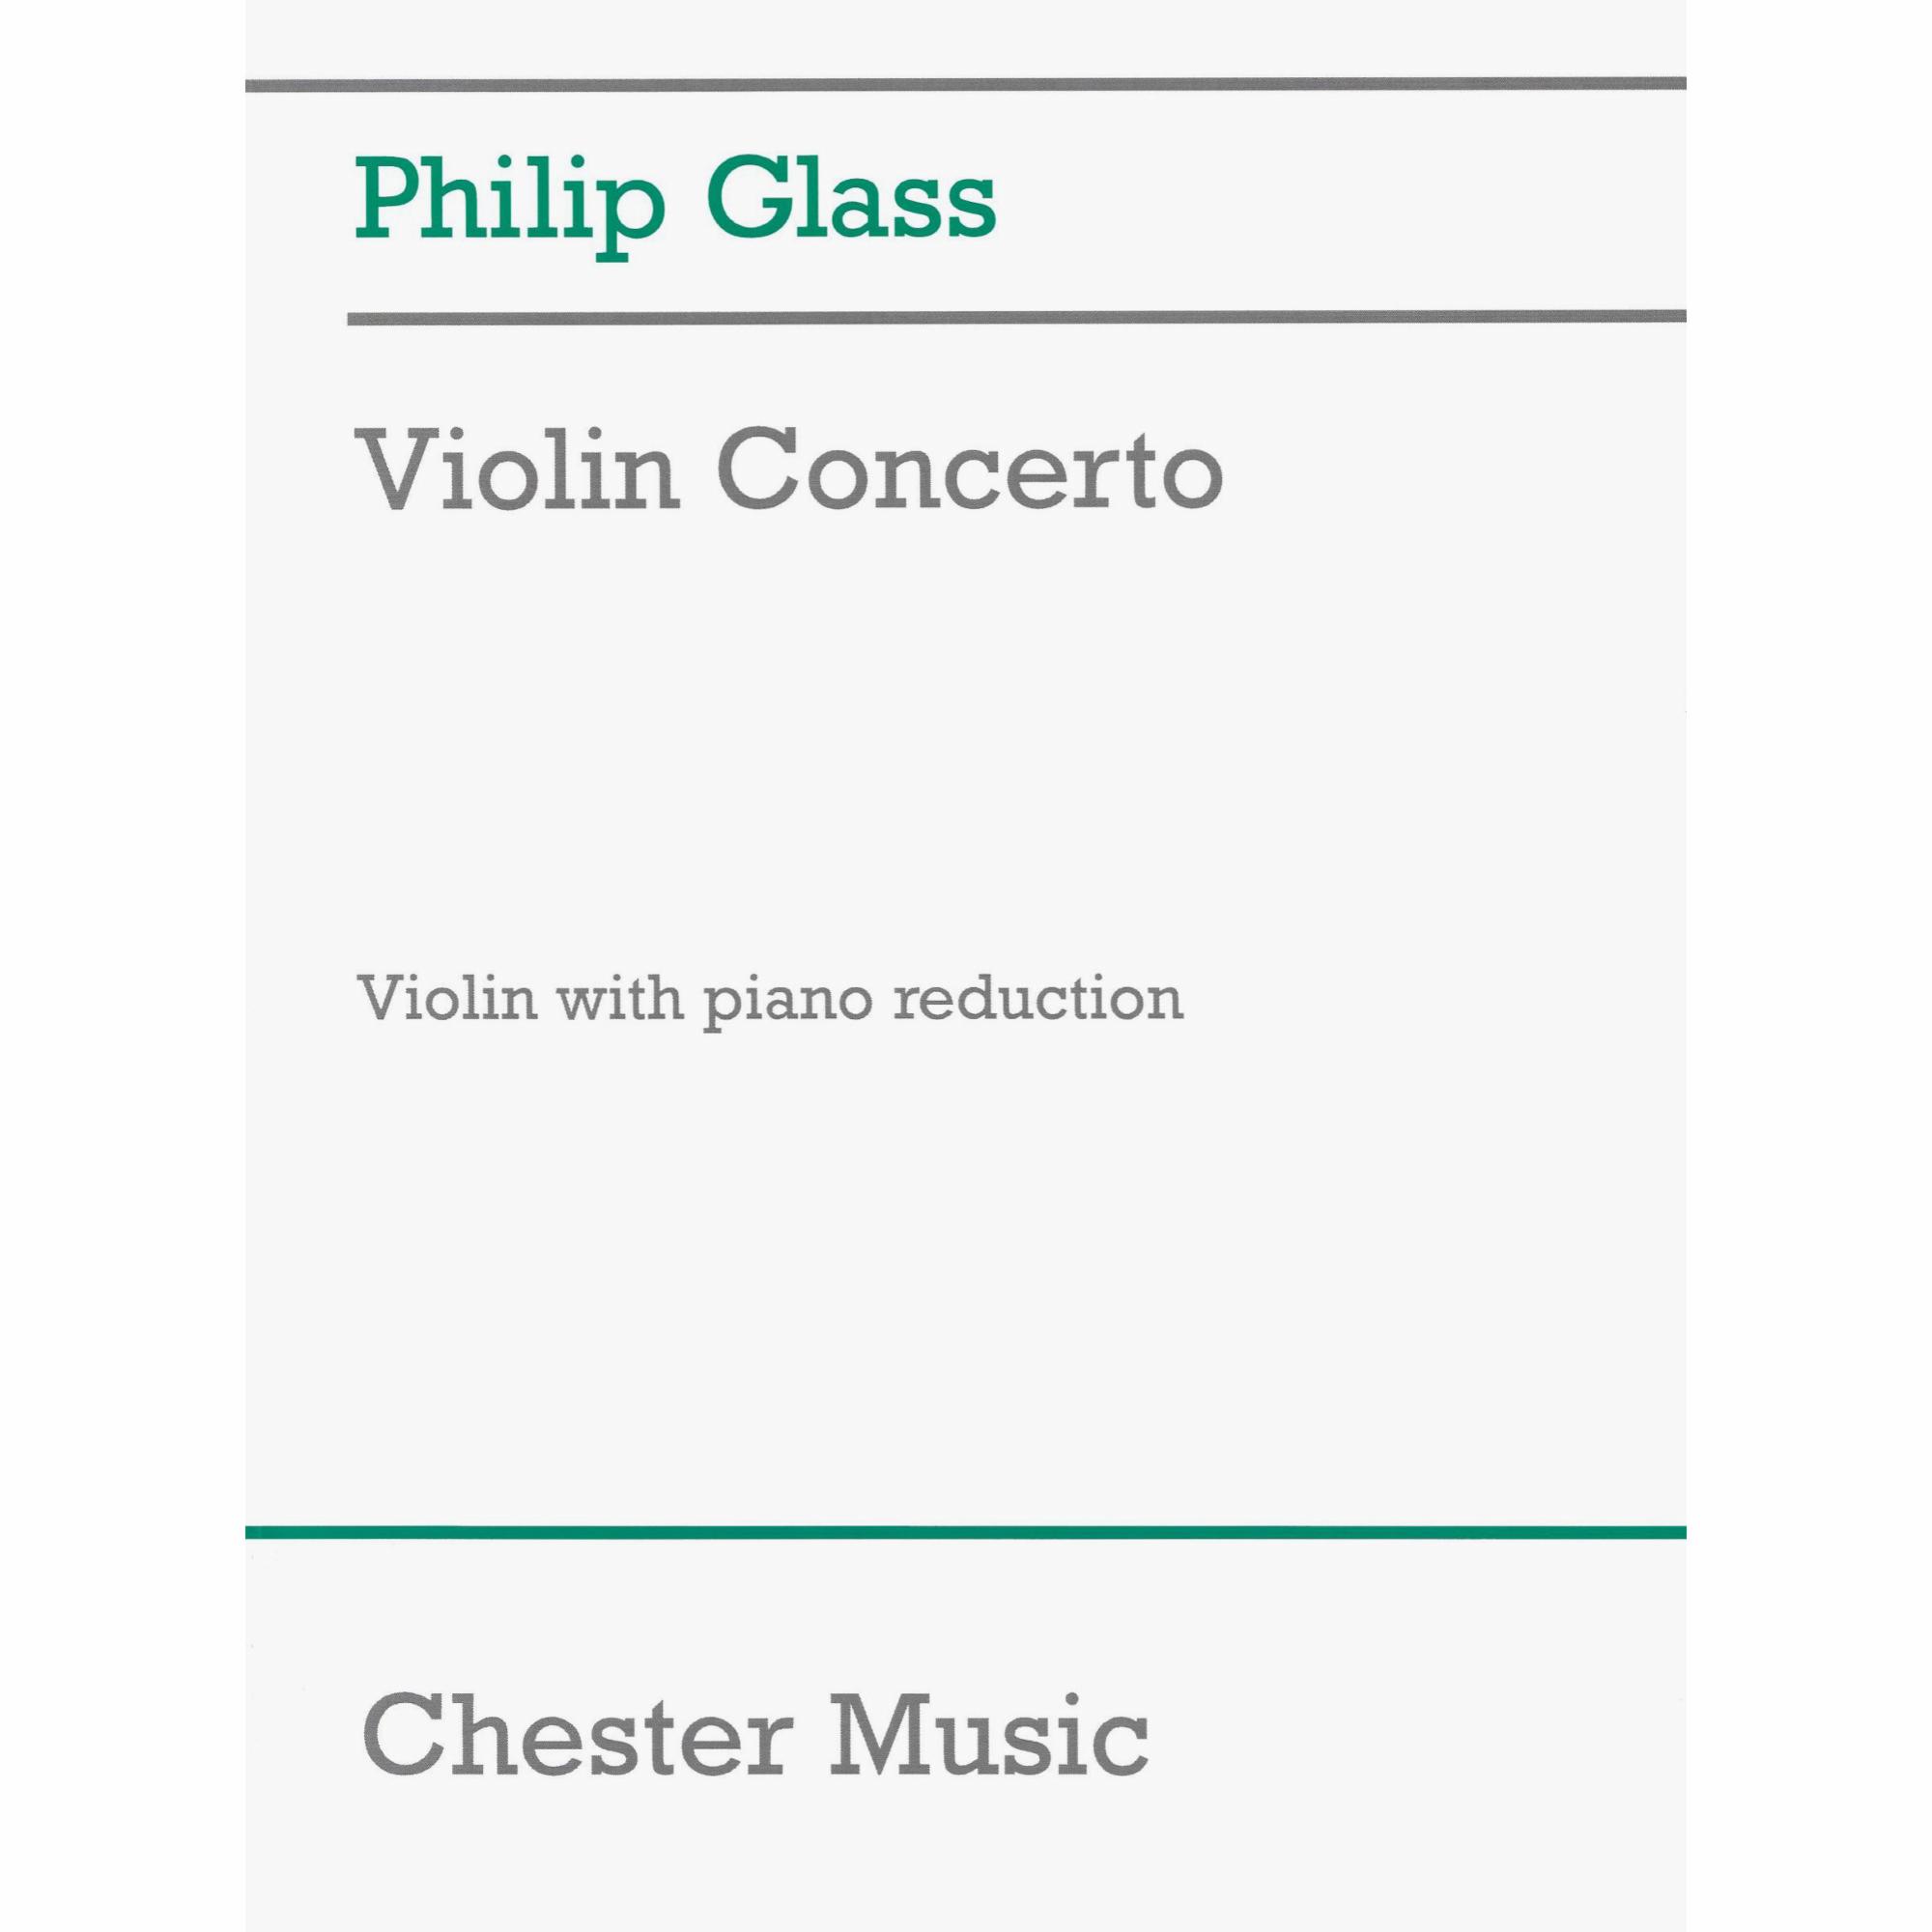 Glass -- Violin Concerto